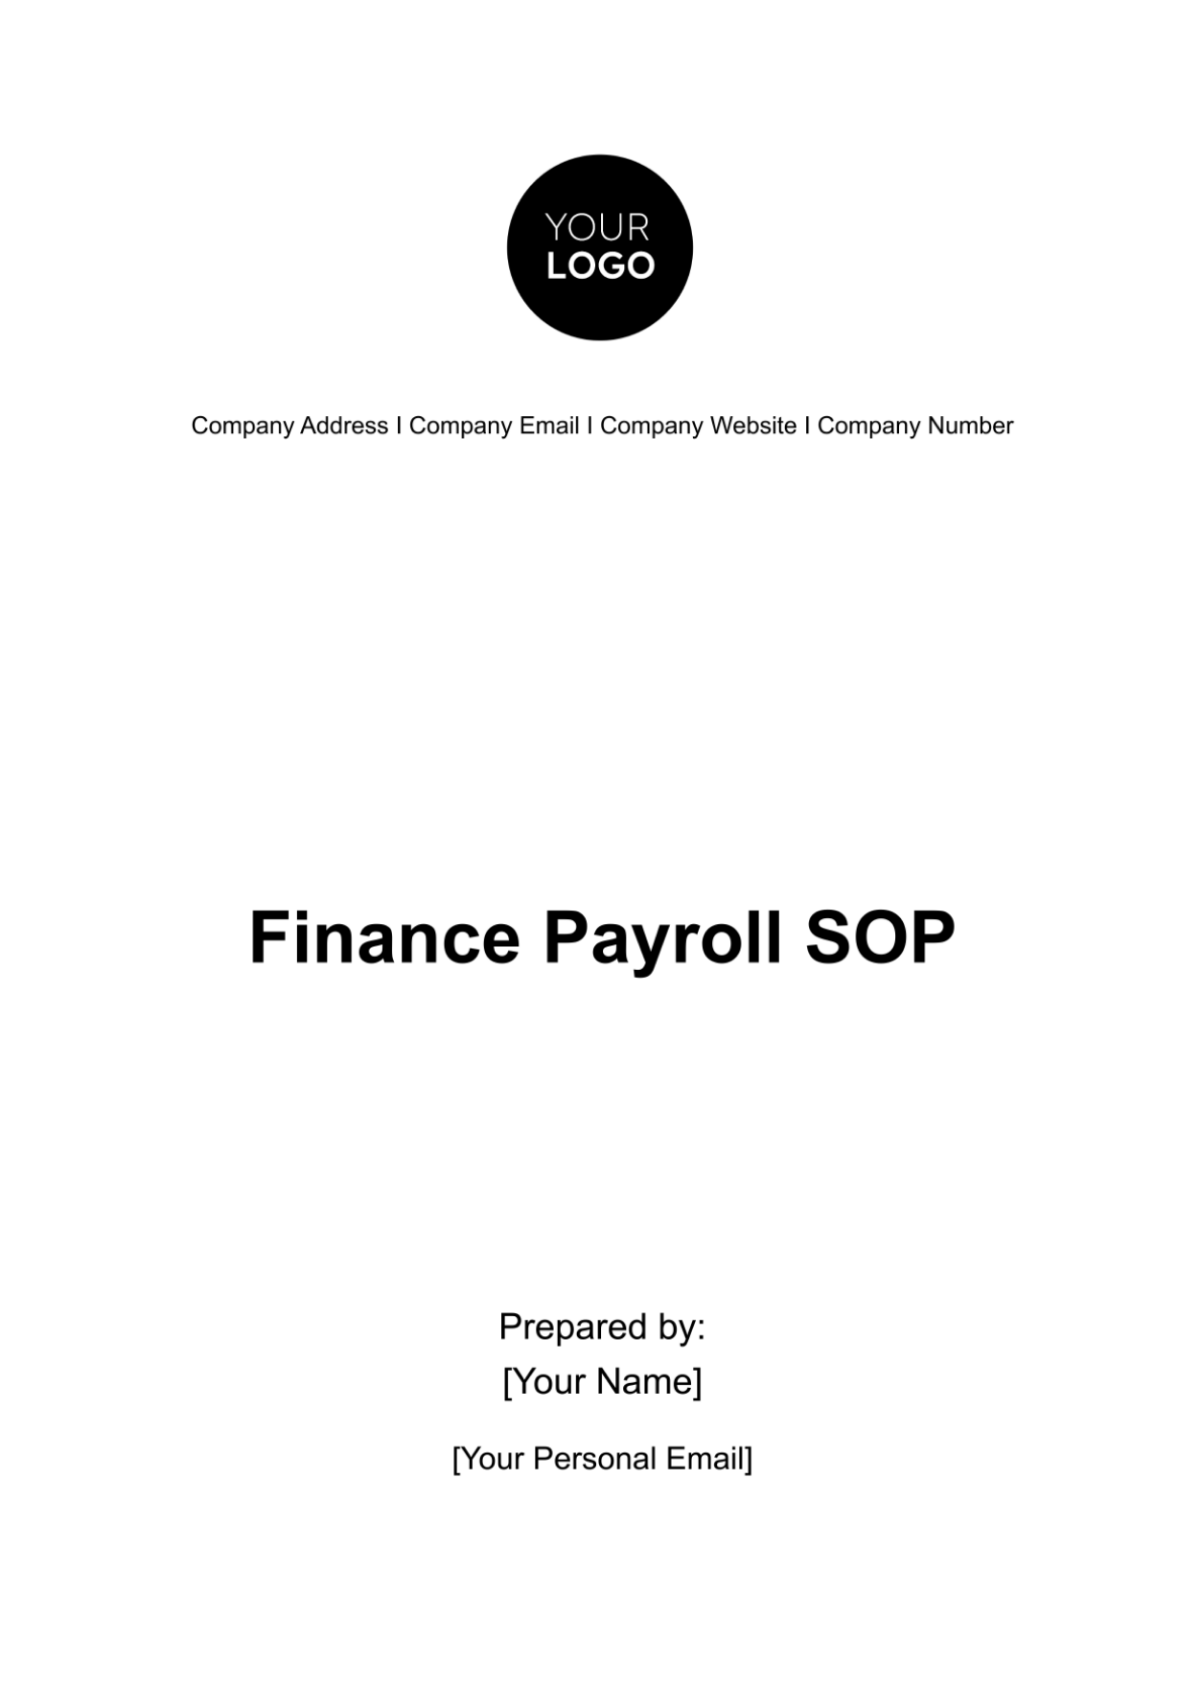 Free Finance Payroll SOP Template